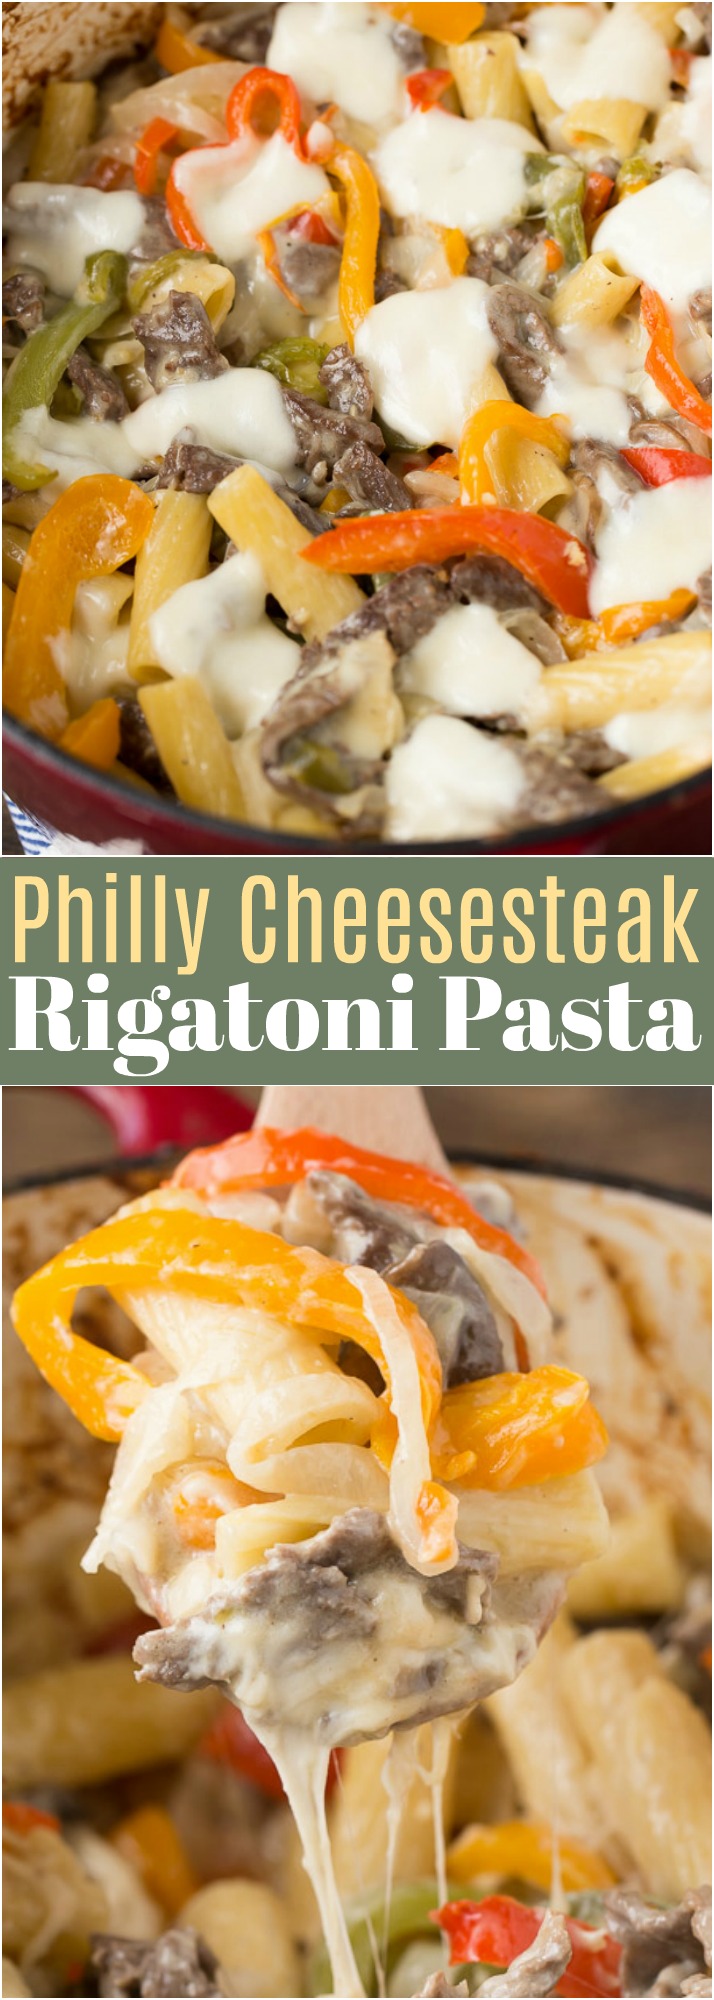 Philly Cheesesteak Rigatoni Pasta! LOVE this recipe!